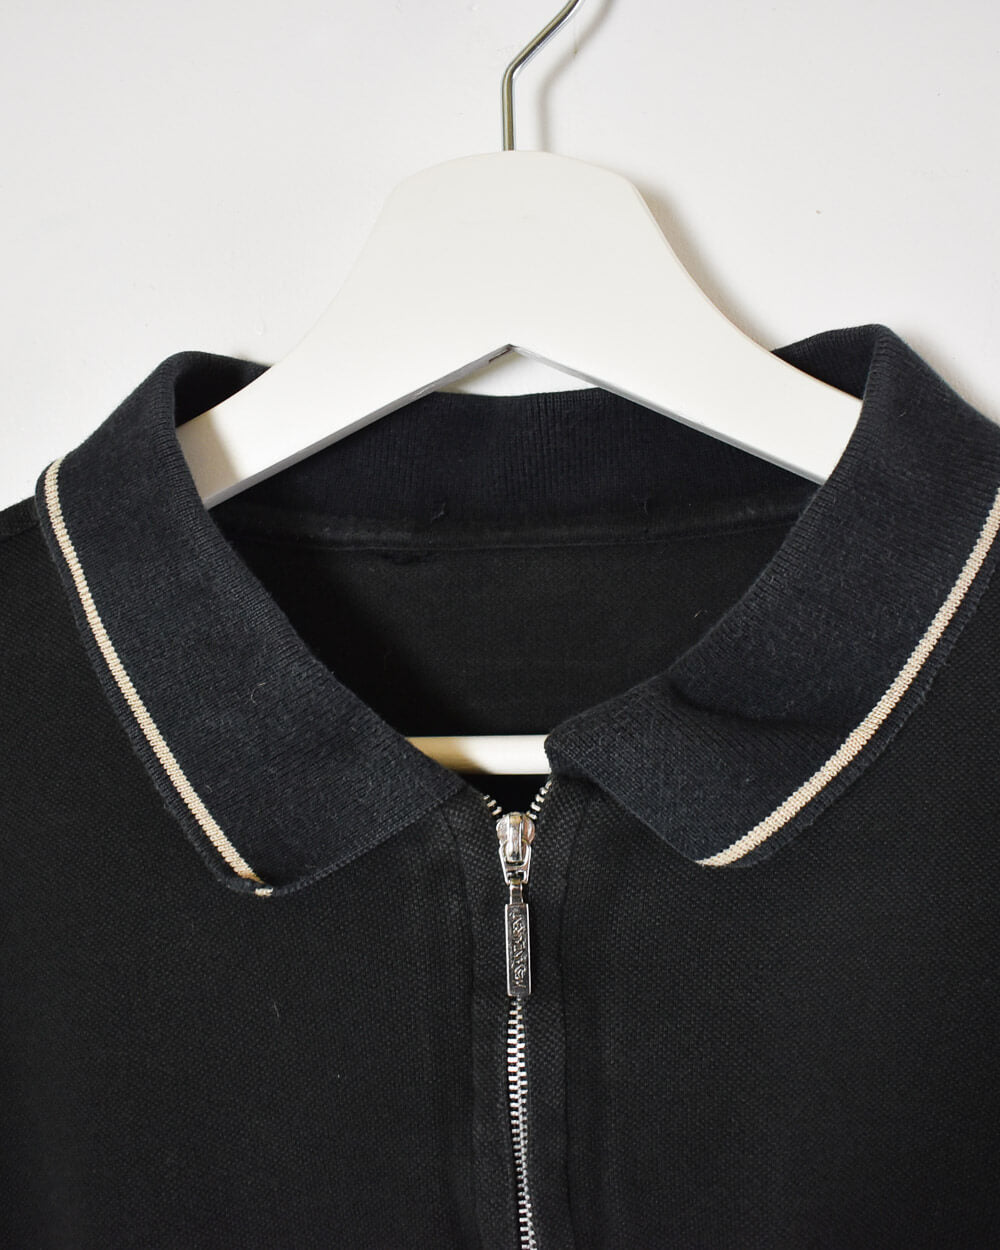 Black Yves Saint Laurent 1/4 Zip Polo Shirt - XX-Large